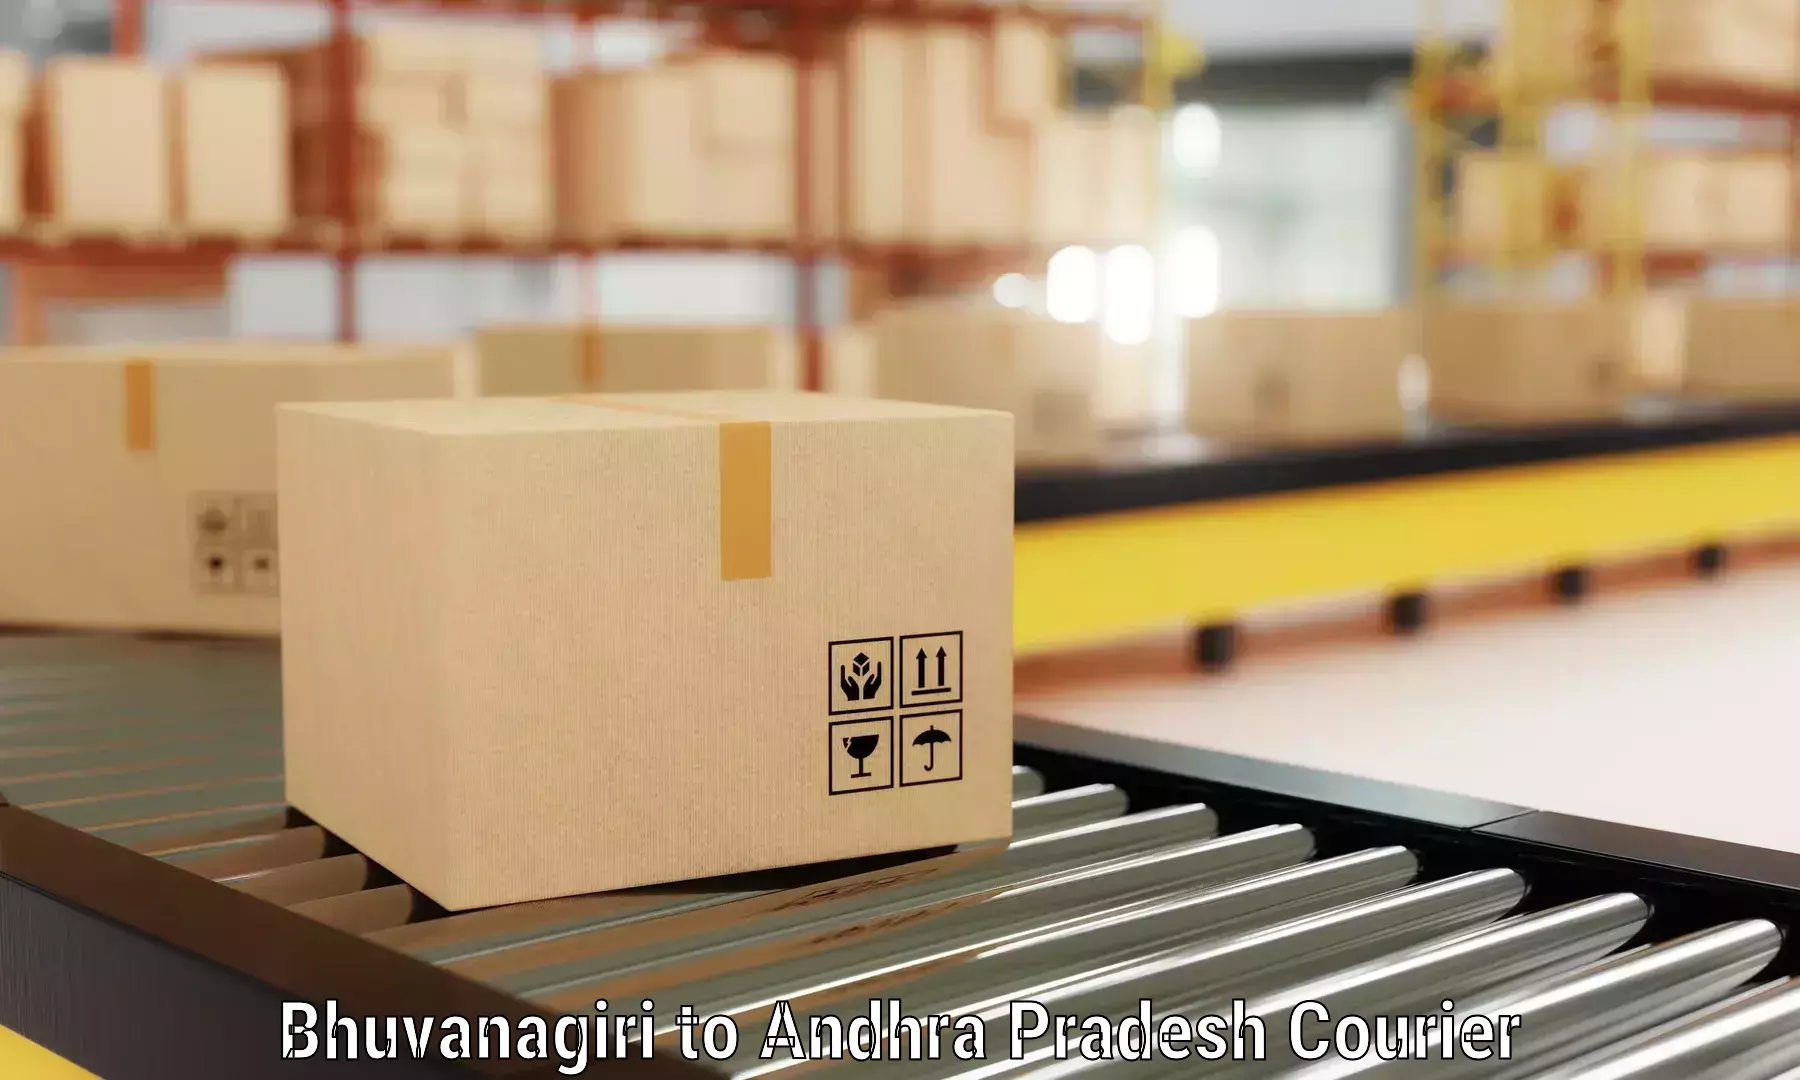 Professional movers and packers Bhuvanagiri to Atchempet